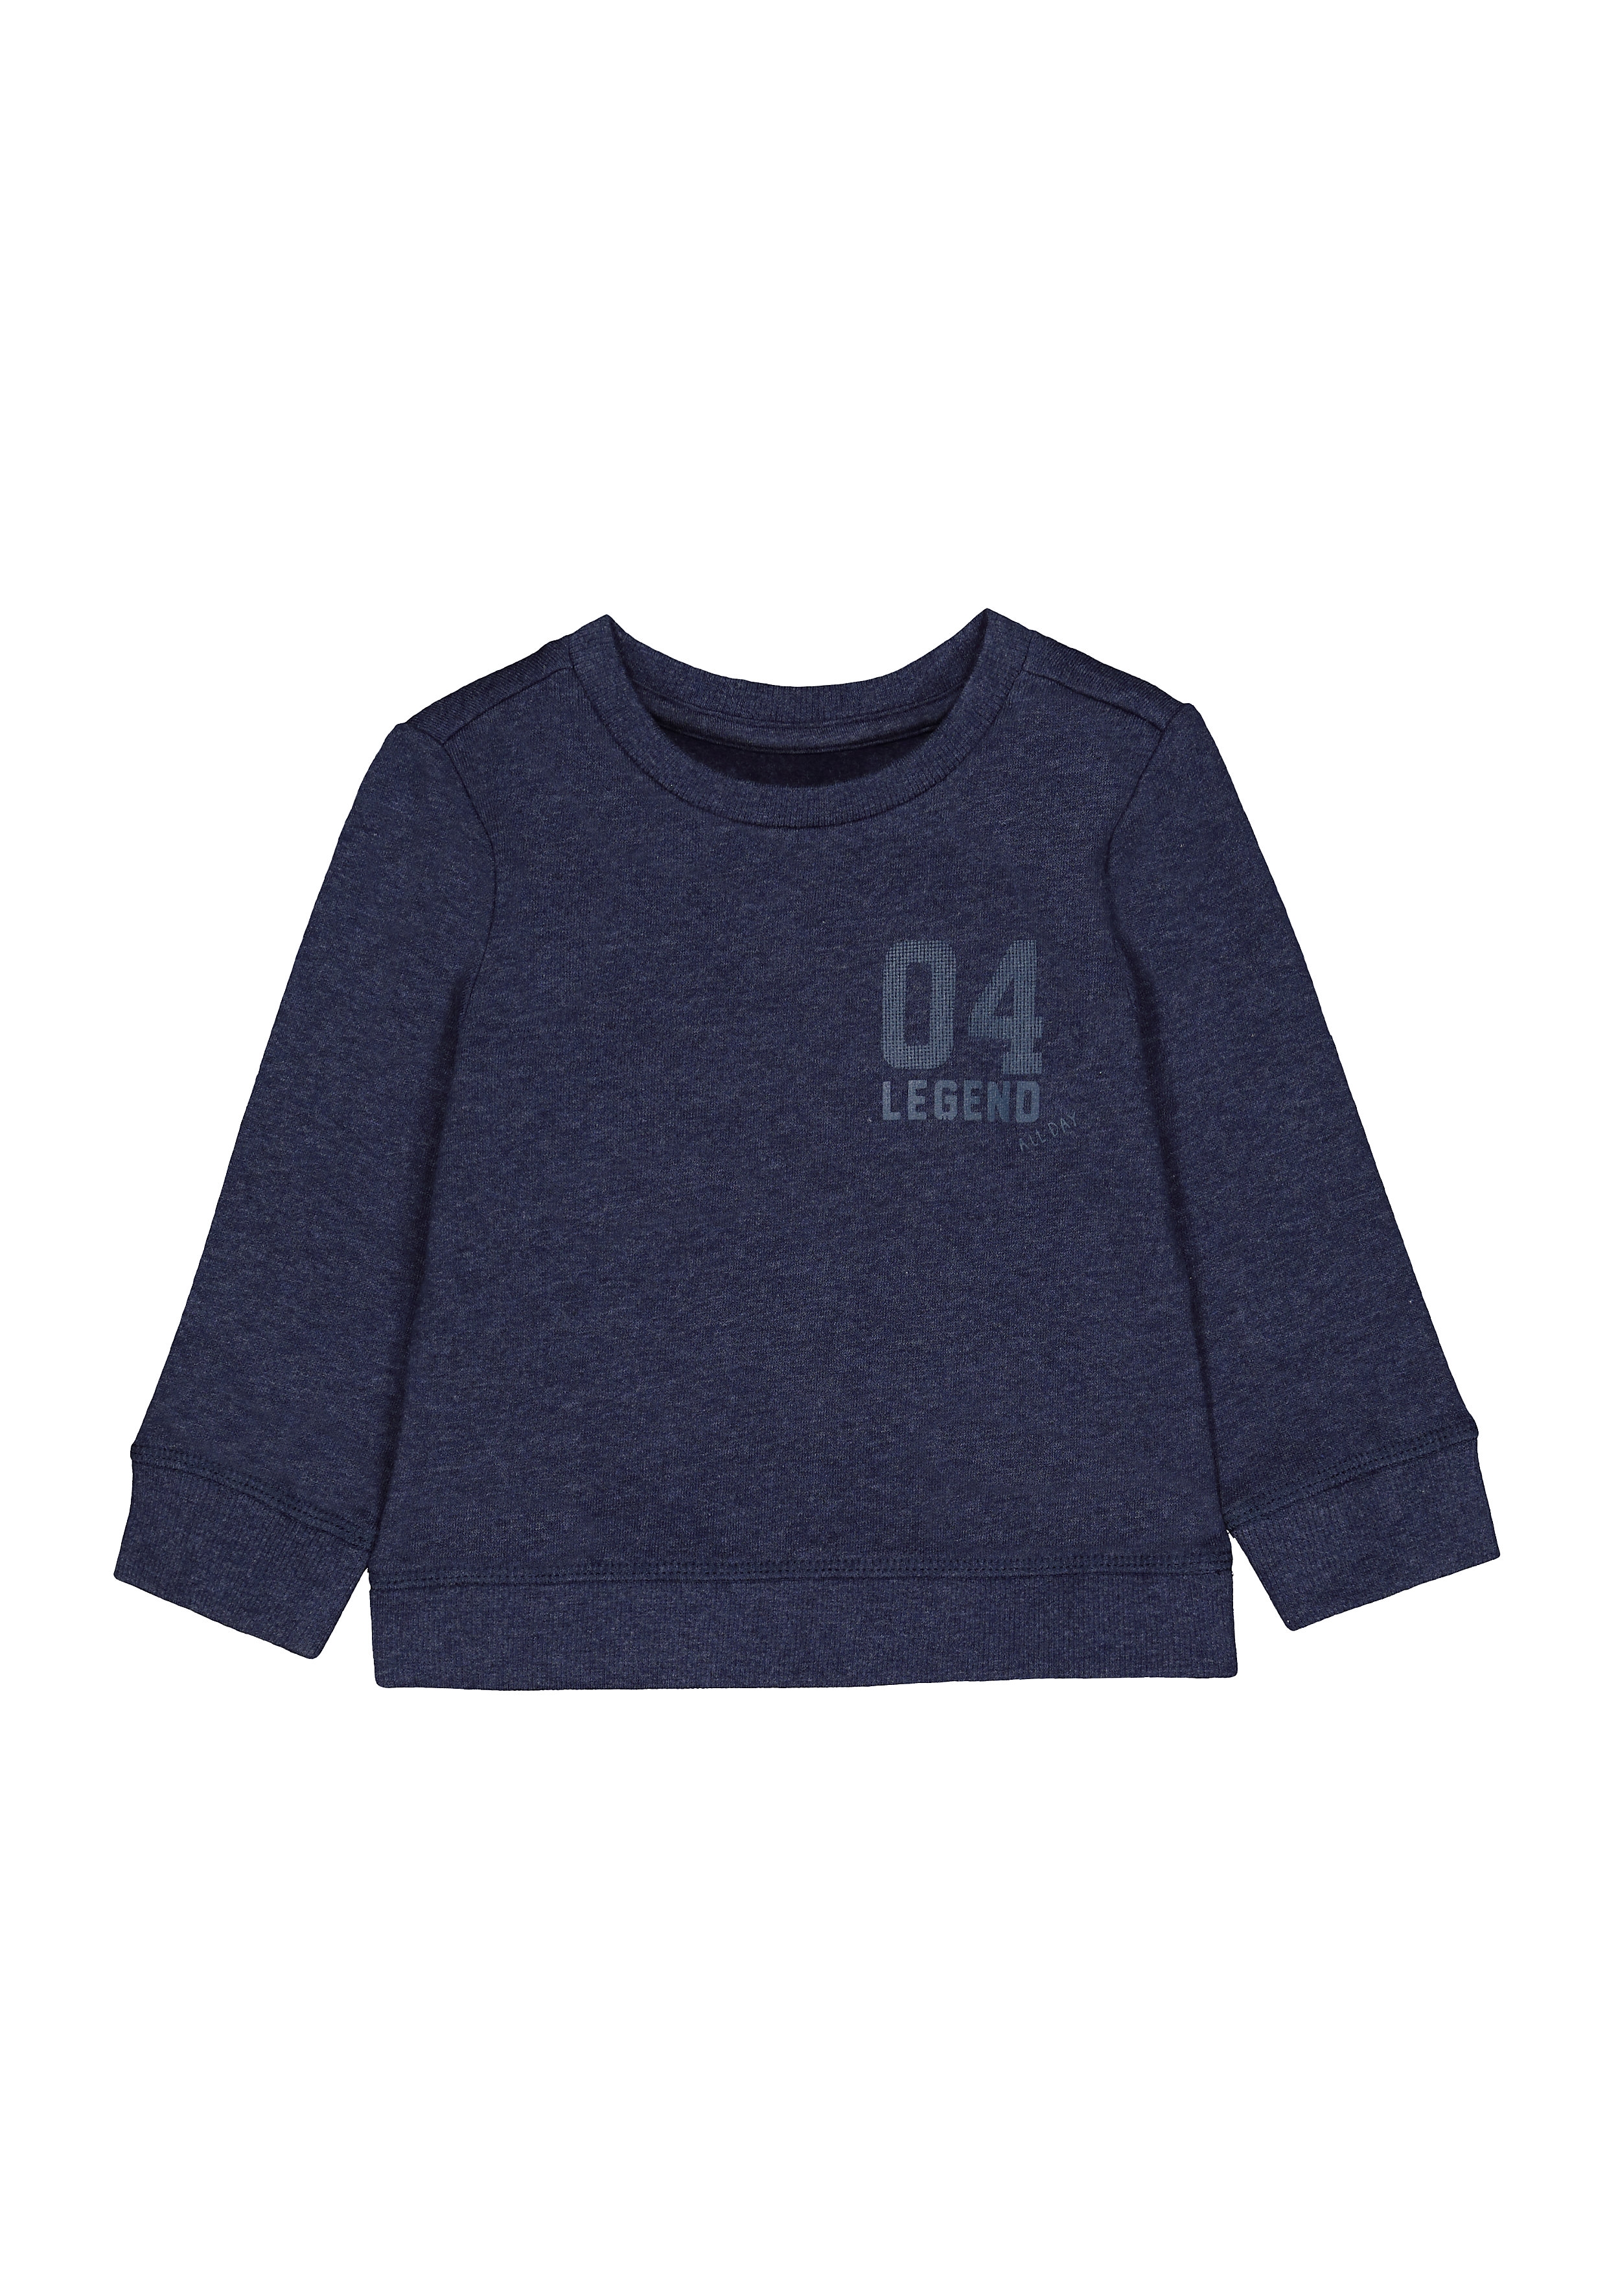 Mothercare | Boys Full Sleeves Sweatshirt Text Print - Navy 0